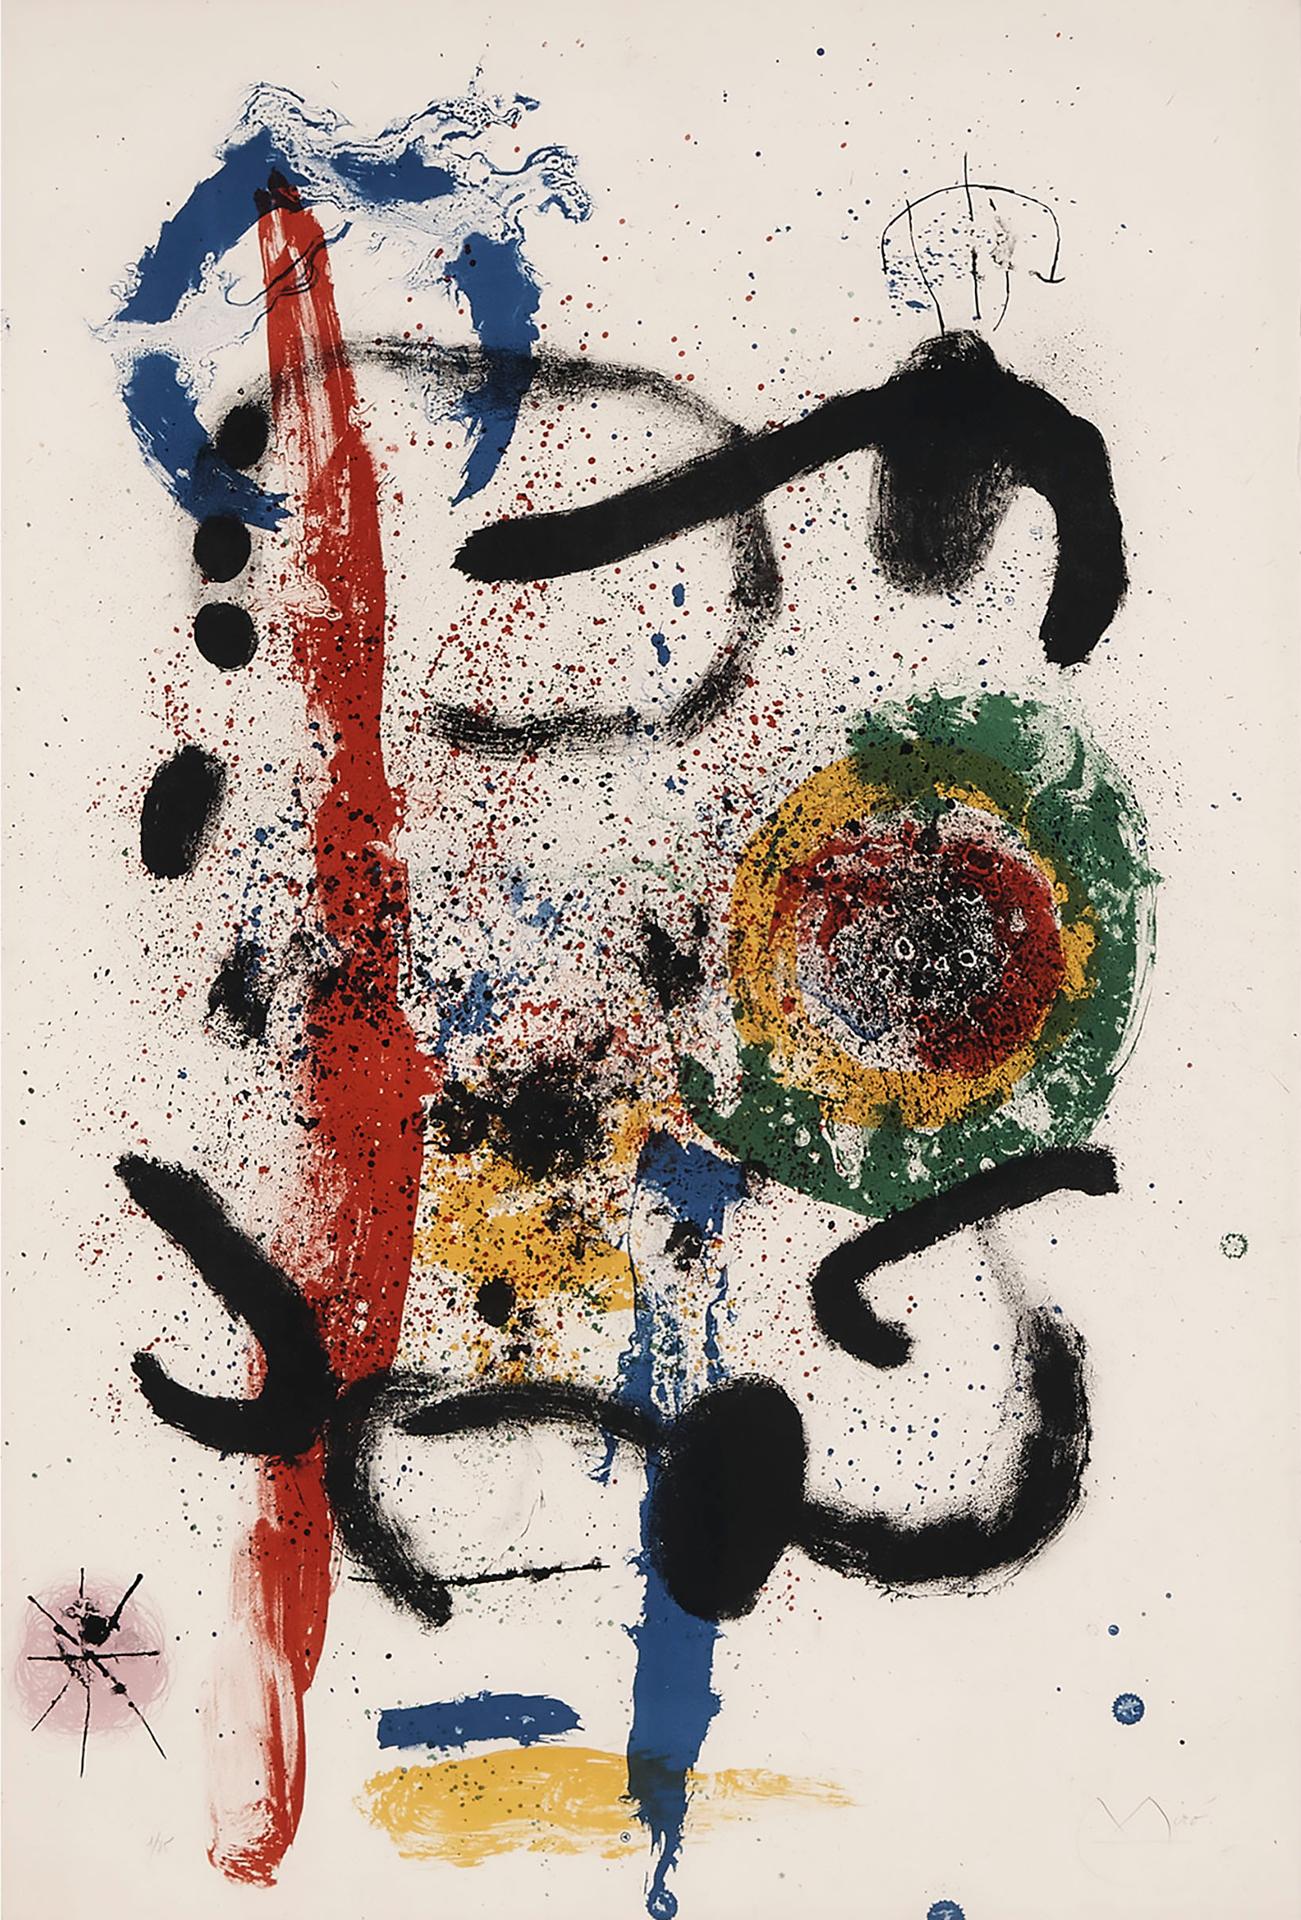 Joan Miró (1893-1983) - LA CASCADA, 1964 [M. 323]